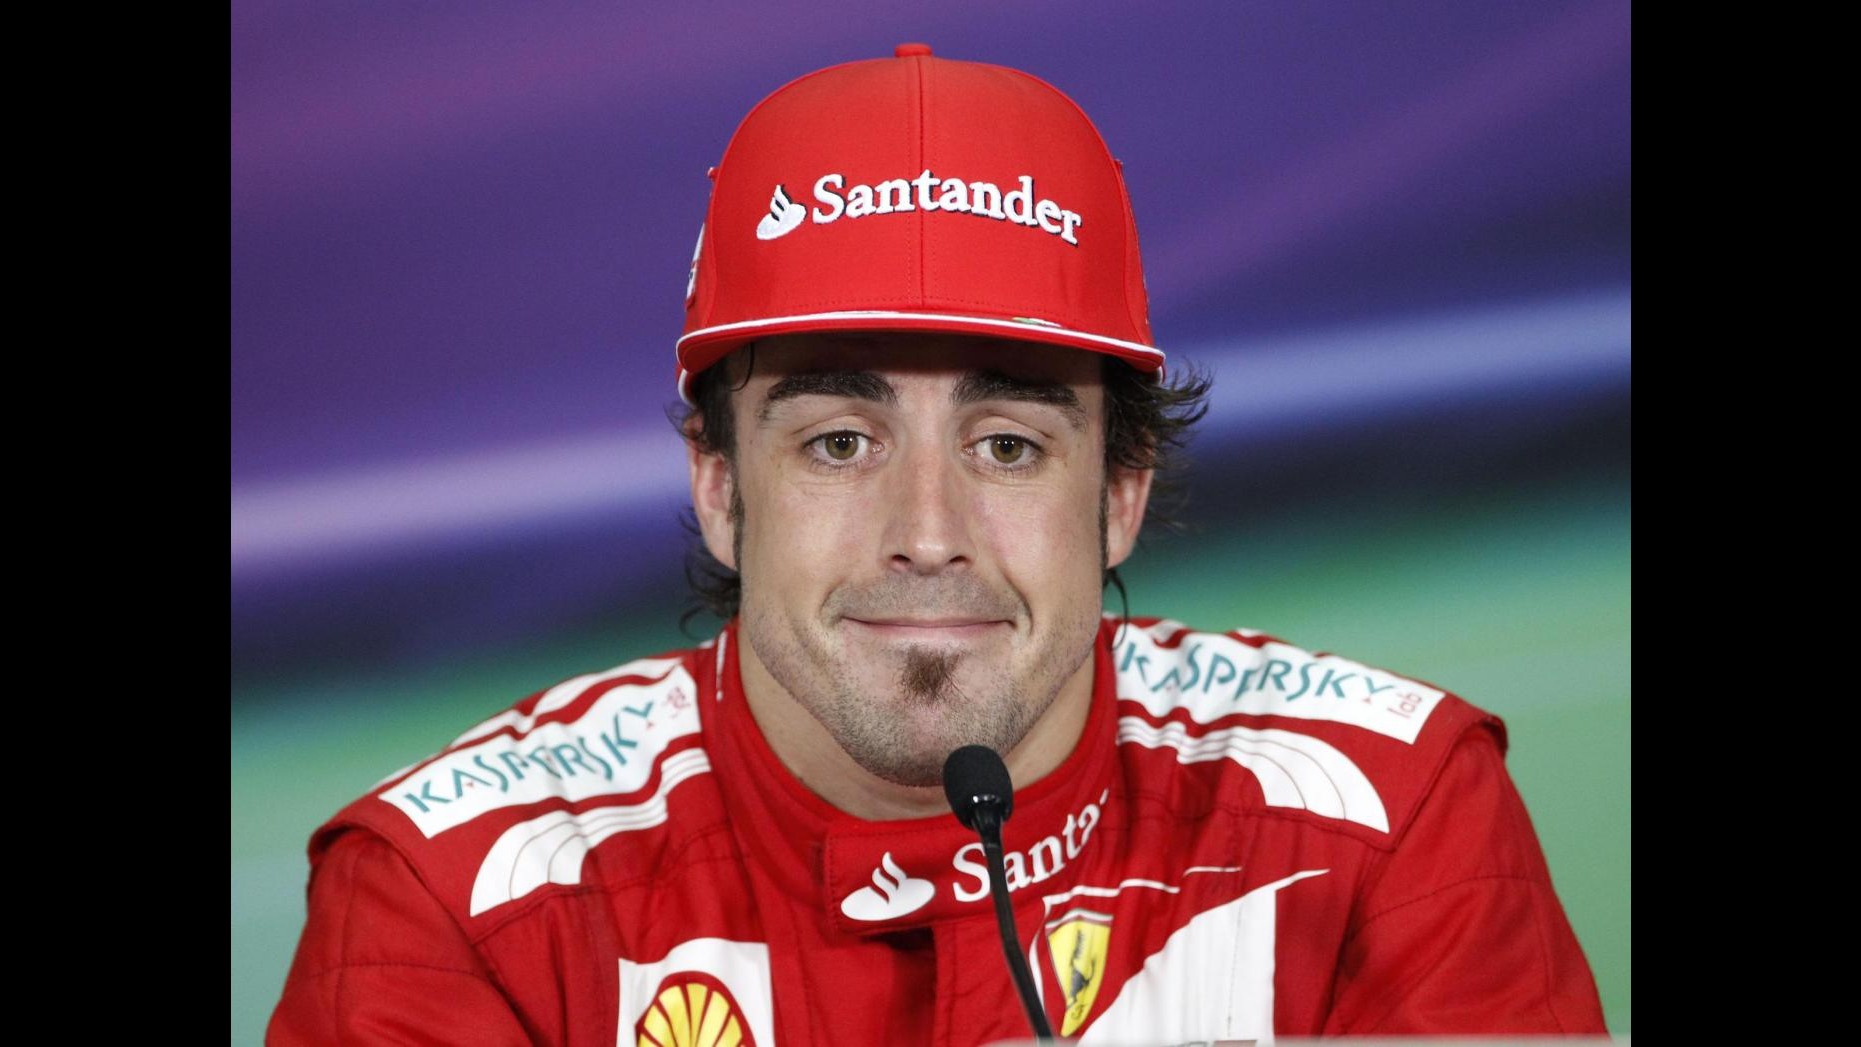 F1, Alonso: Dedico la pole position a Maria de Villota